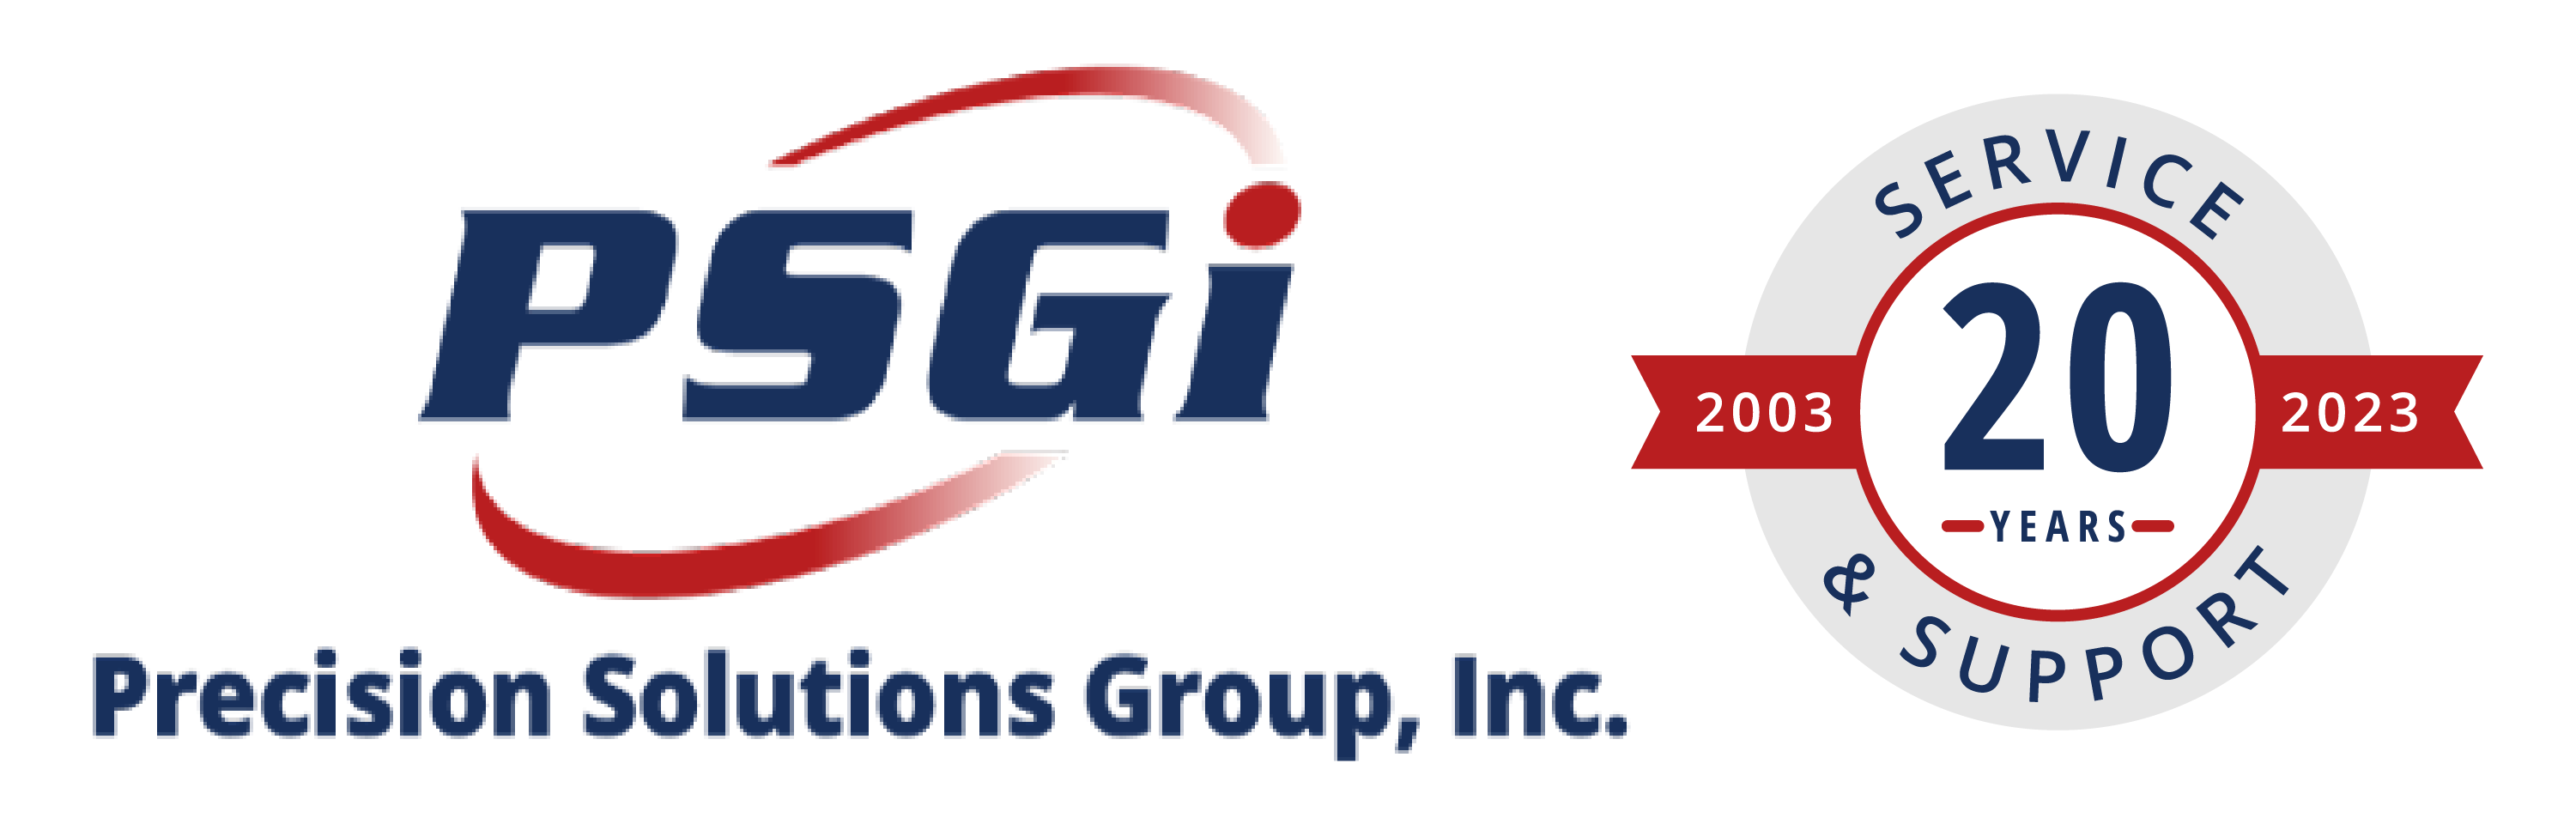 psgi-anniversary-logo-icon